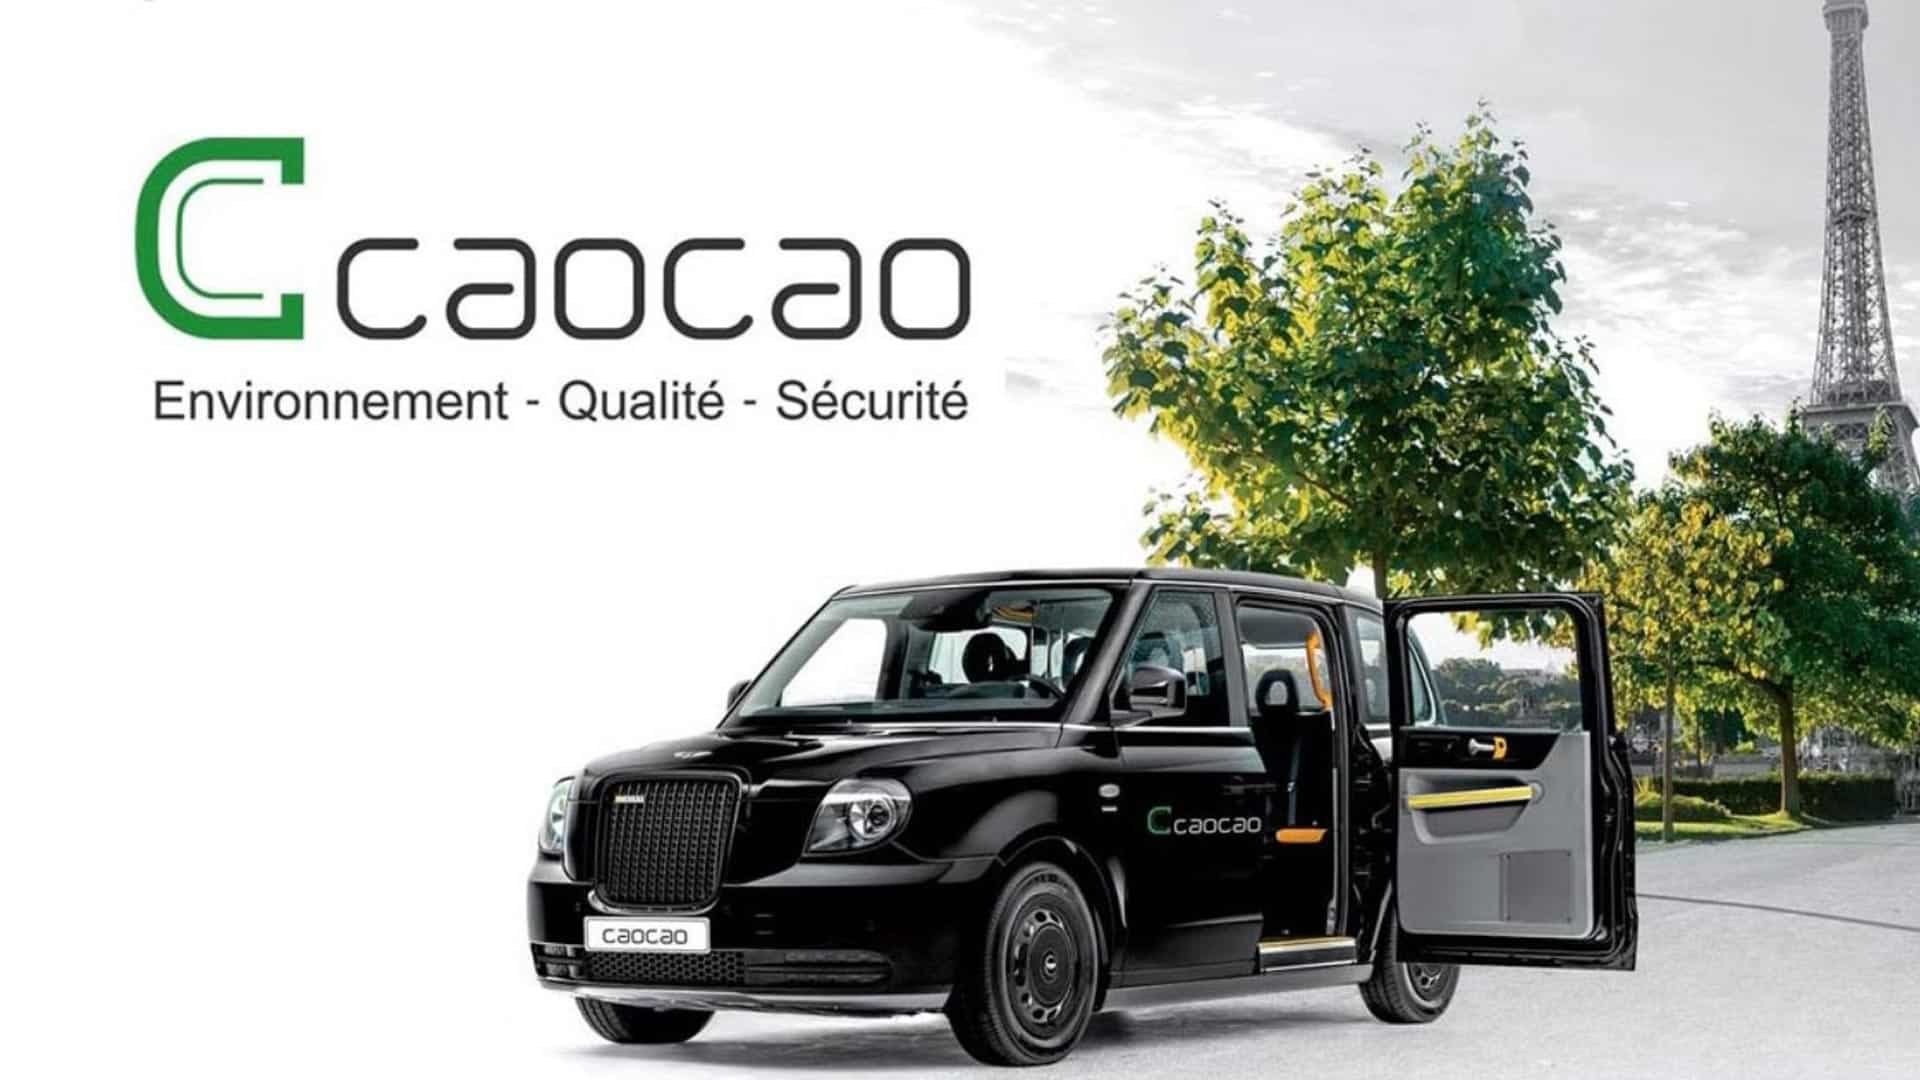 Caocao's expansion to Paris Region